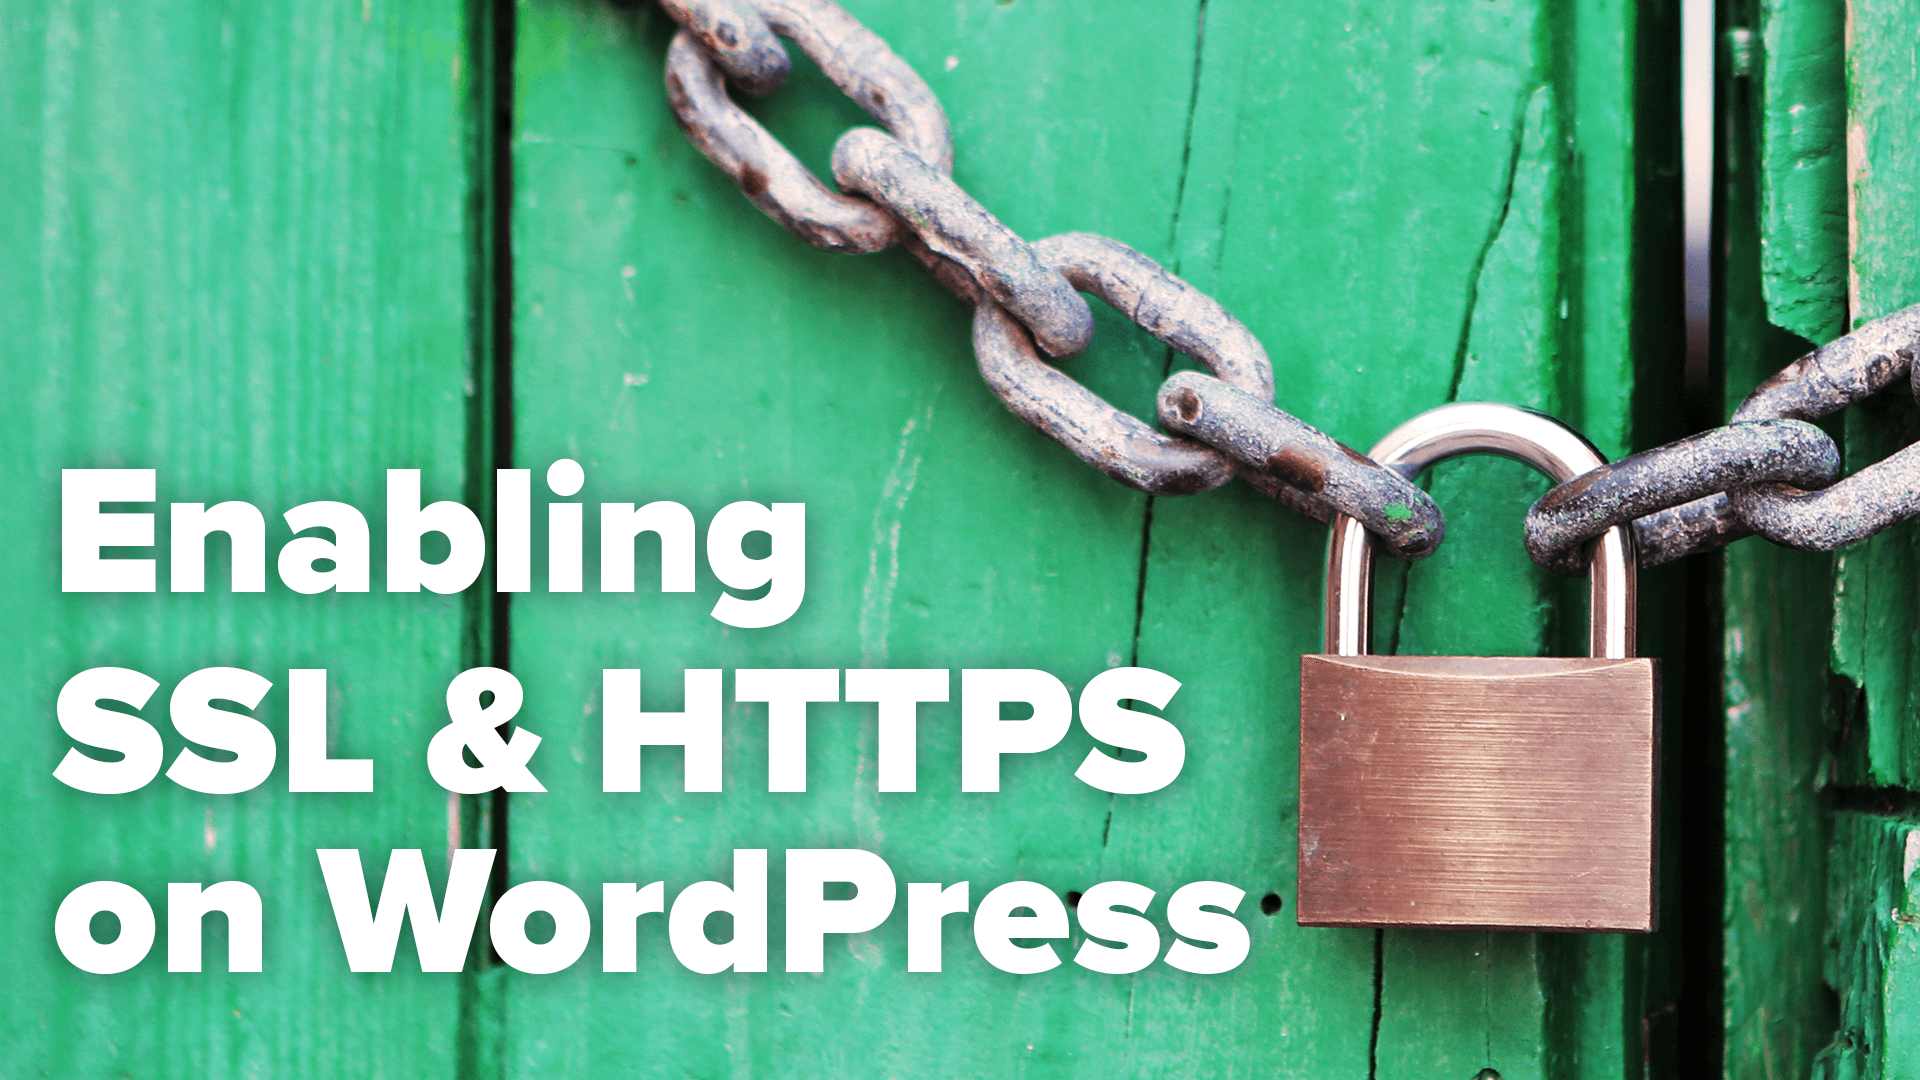 Enabling SSL & HTTPS on WordPress